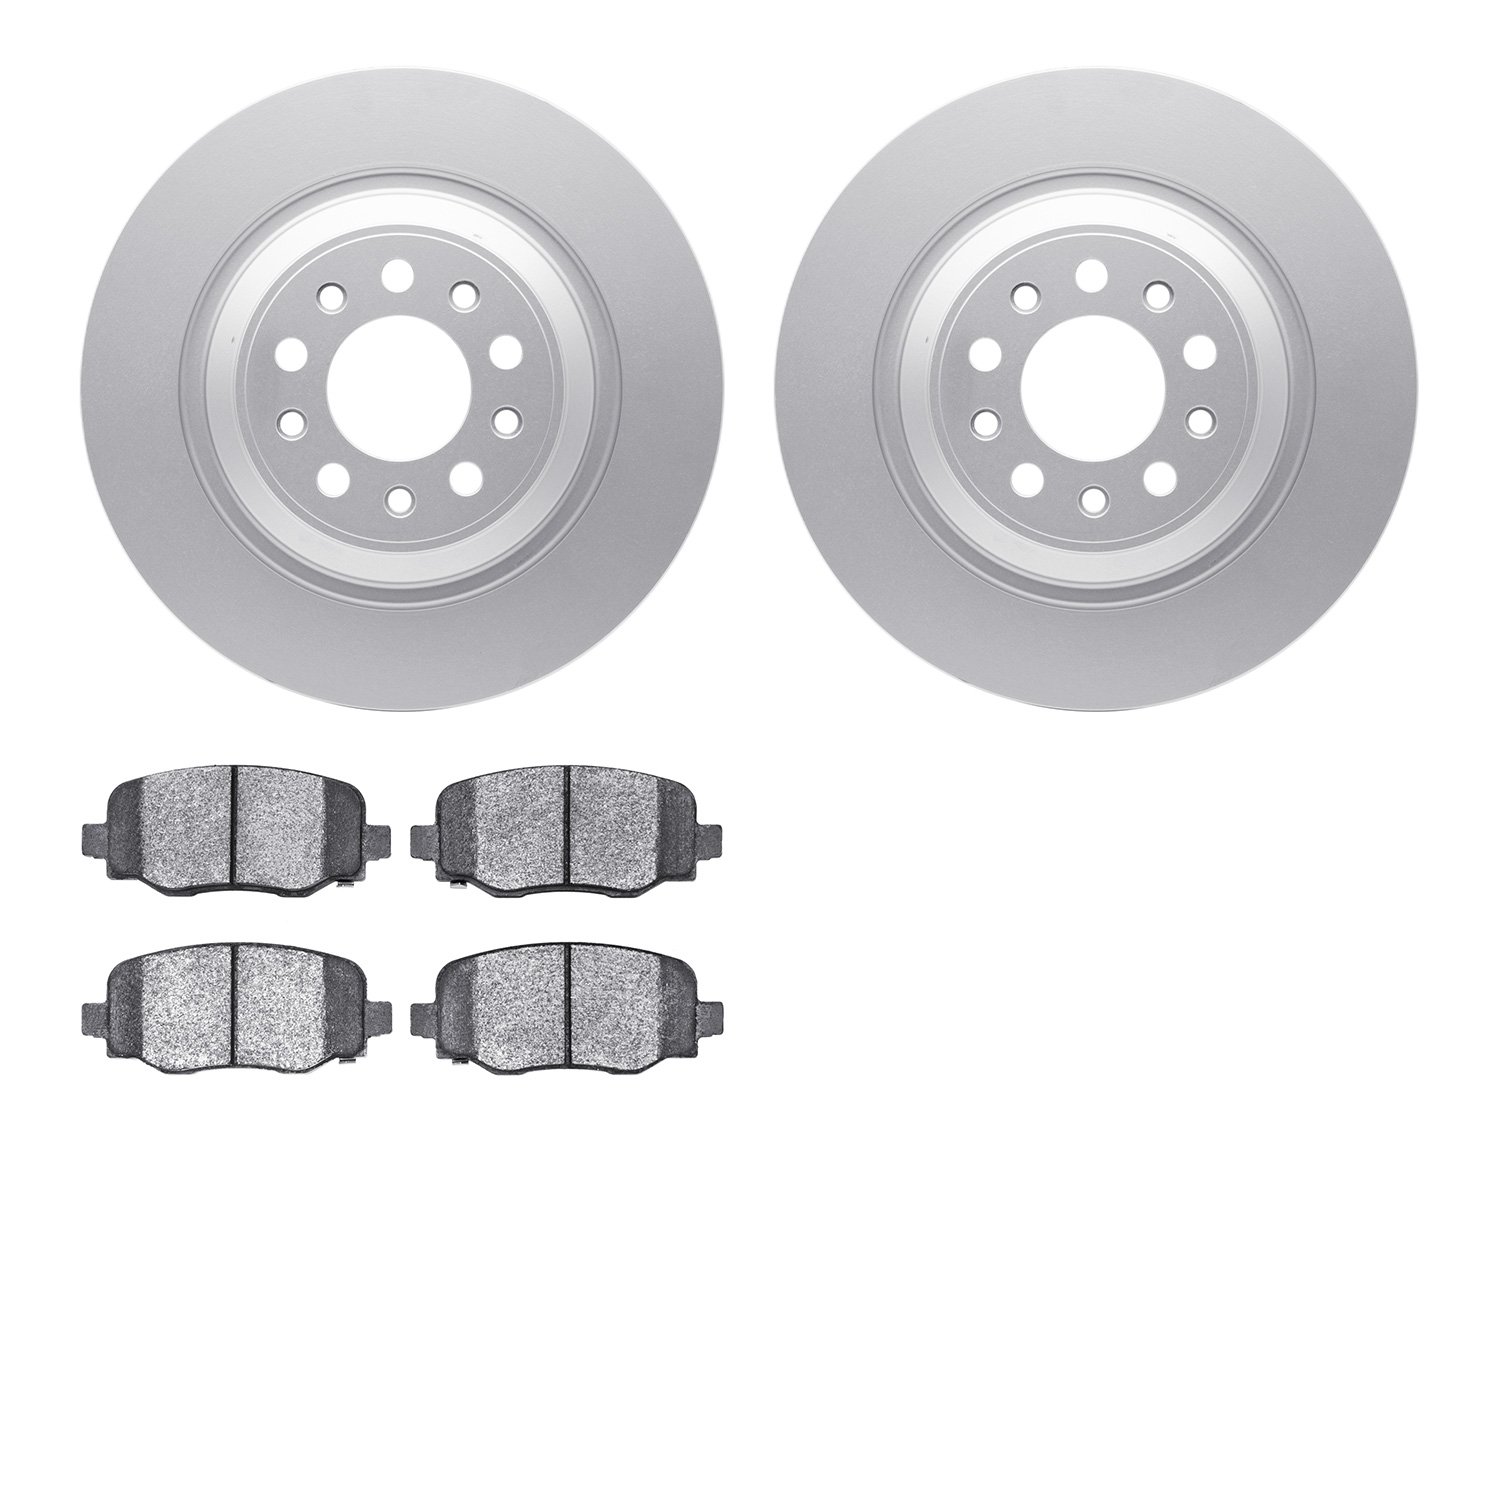 4402-42011 Geospec Brake Rotors with Ultimate-Duty Brake Pads Kit, Fits Select Mopar, Position: Rear